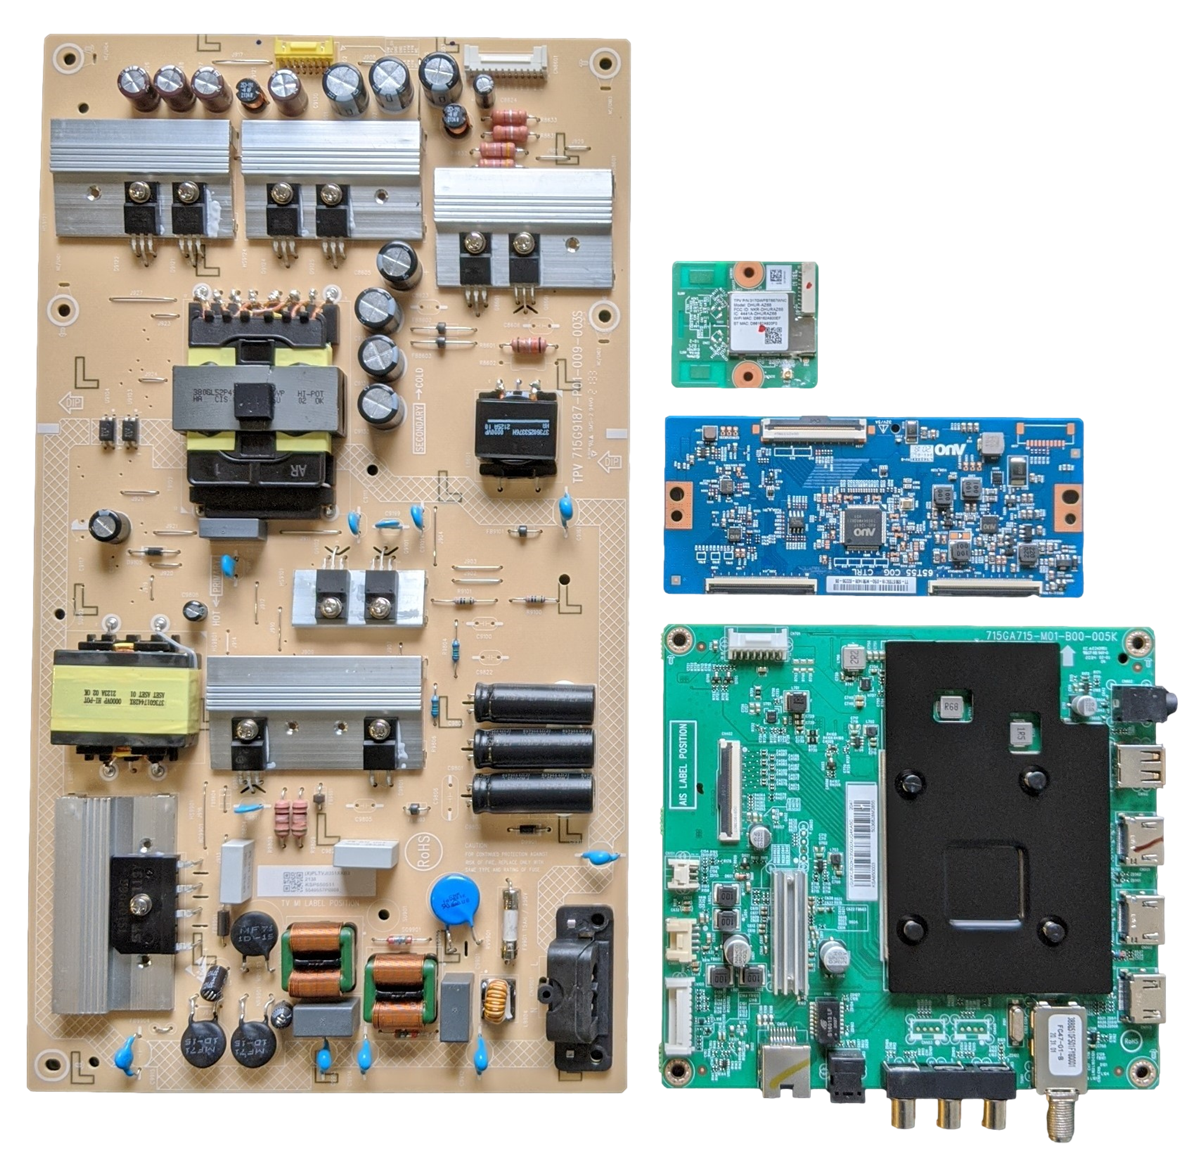 NS-65DF710NA21 Insignia TV Repair Parts Kit, 756TXKCB02K035 Main Board, PLTVJI251XXB3 Power Supply, 55.65T55.C19 T-Con, 317GWFBT667WNC Wifi, Rev A, NS-65DF710NA21